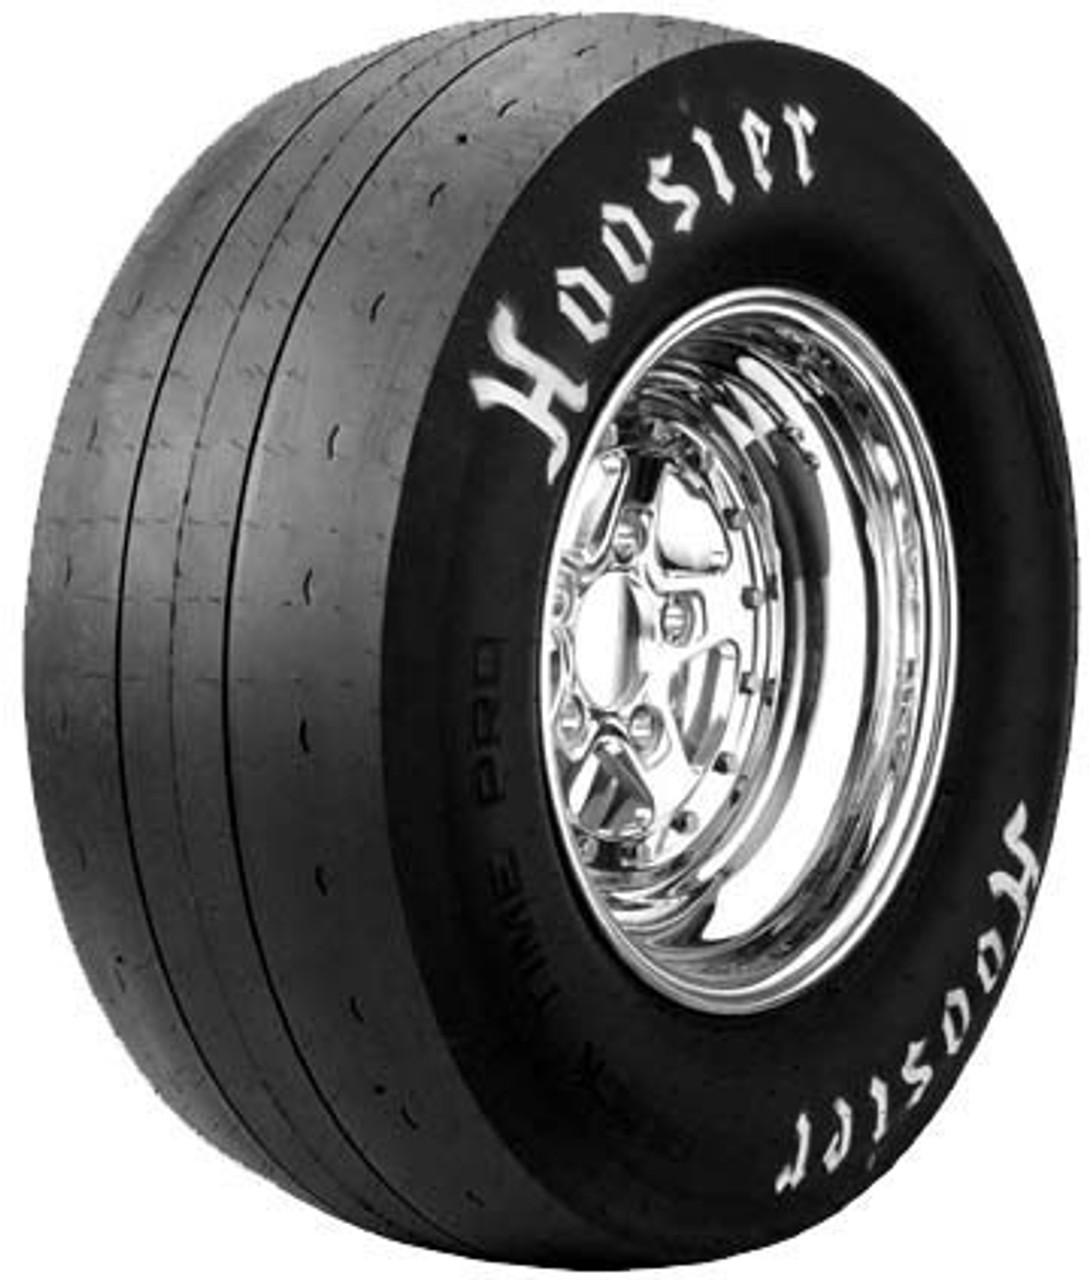 Hoosier Quick Time Pro  D.O.T. Drag Racing Tire 28 X 13.50-15 LT - 17606QTPRO